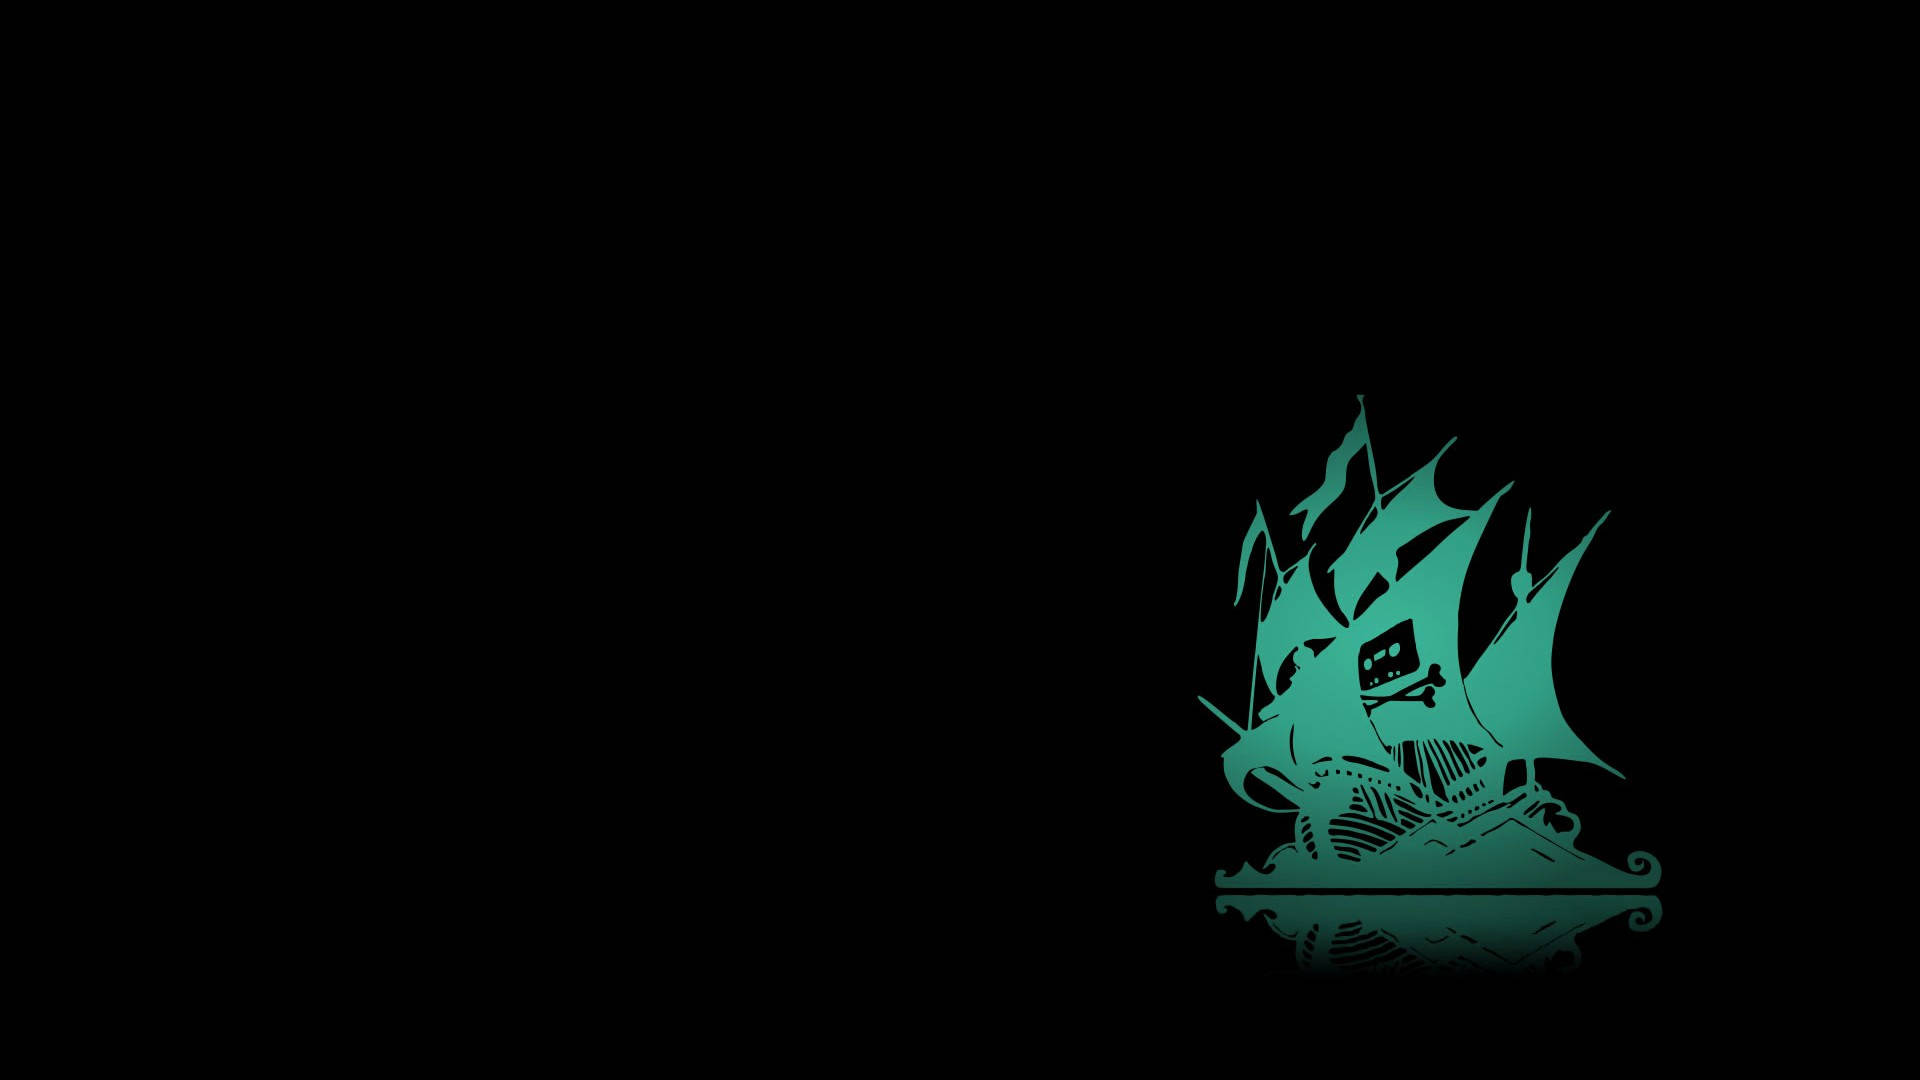 Teal Pirate Ship